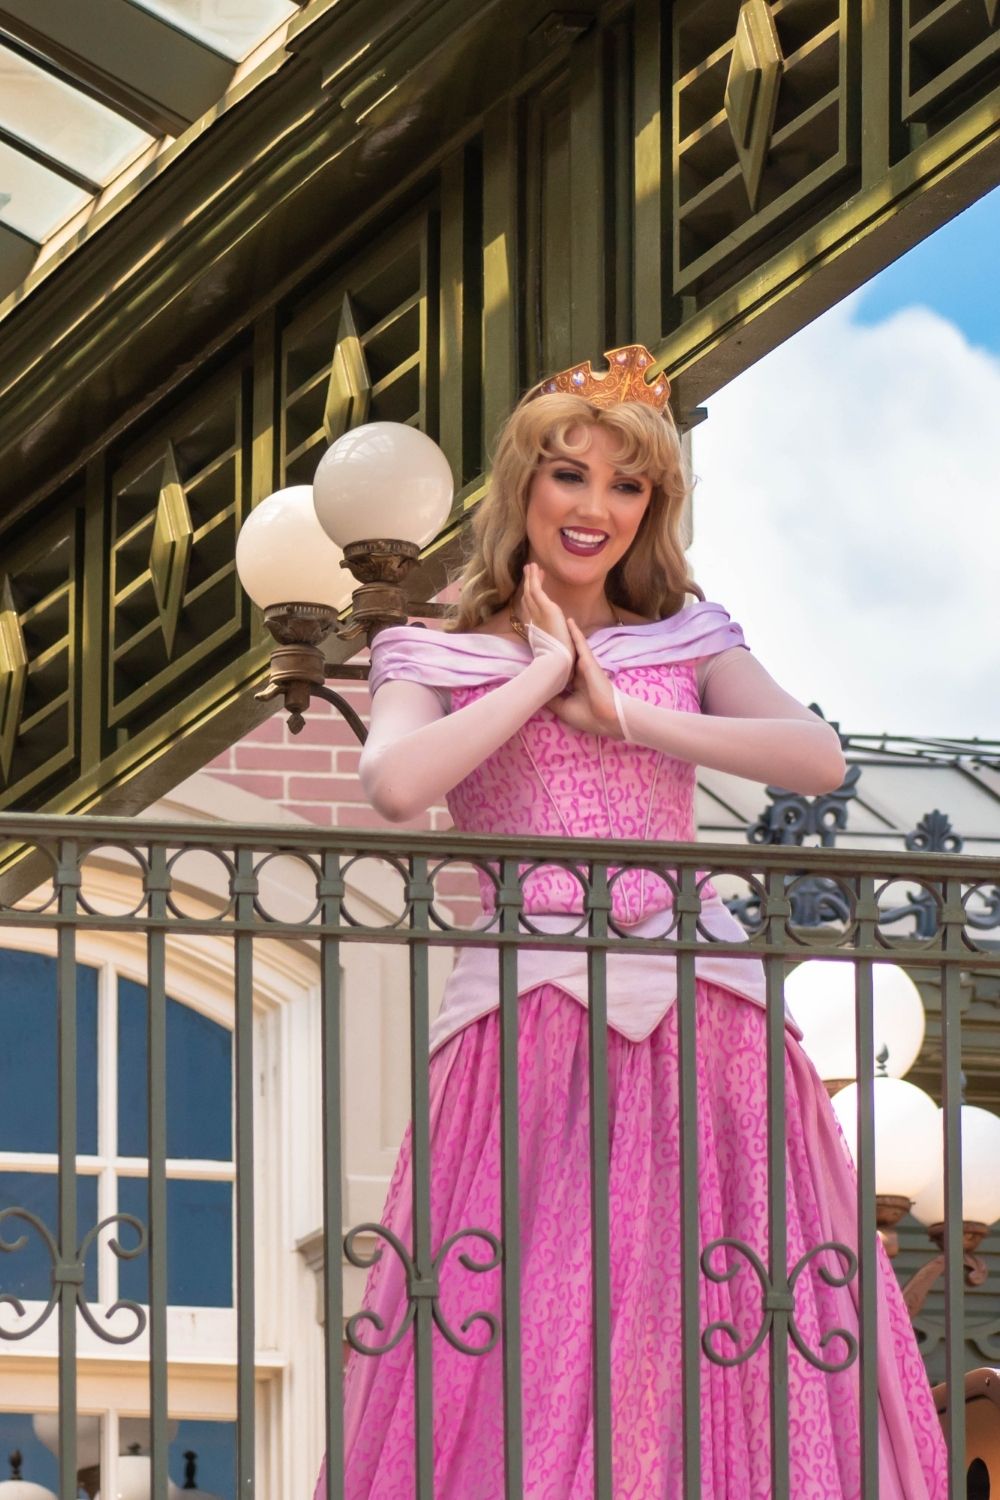 Aurora, the Disney Princess from Sleeping Beauty, in costume at Disney World